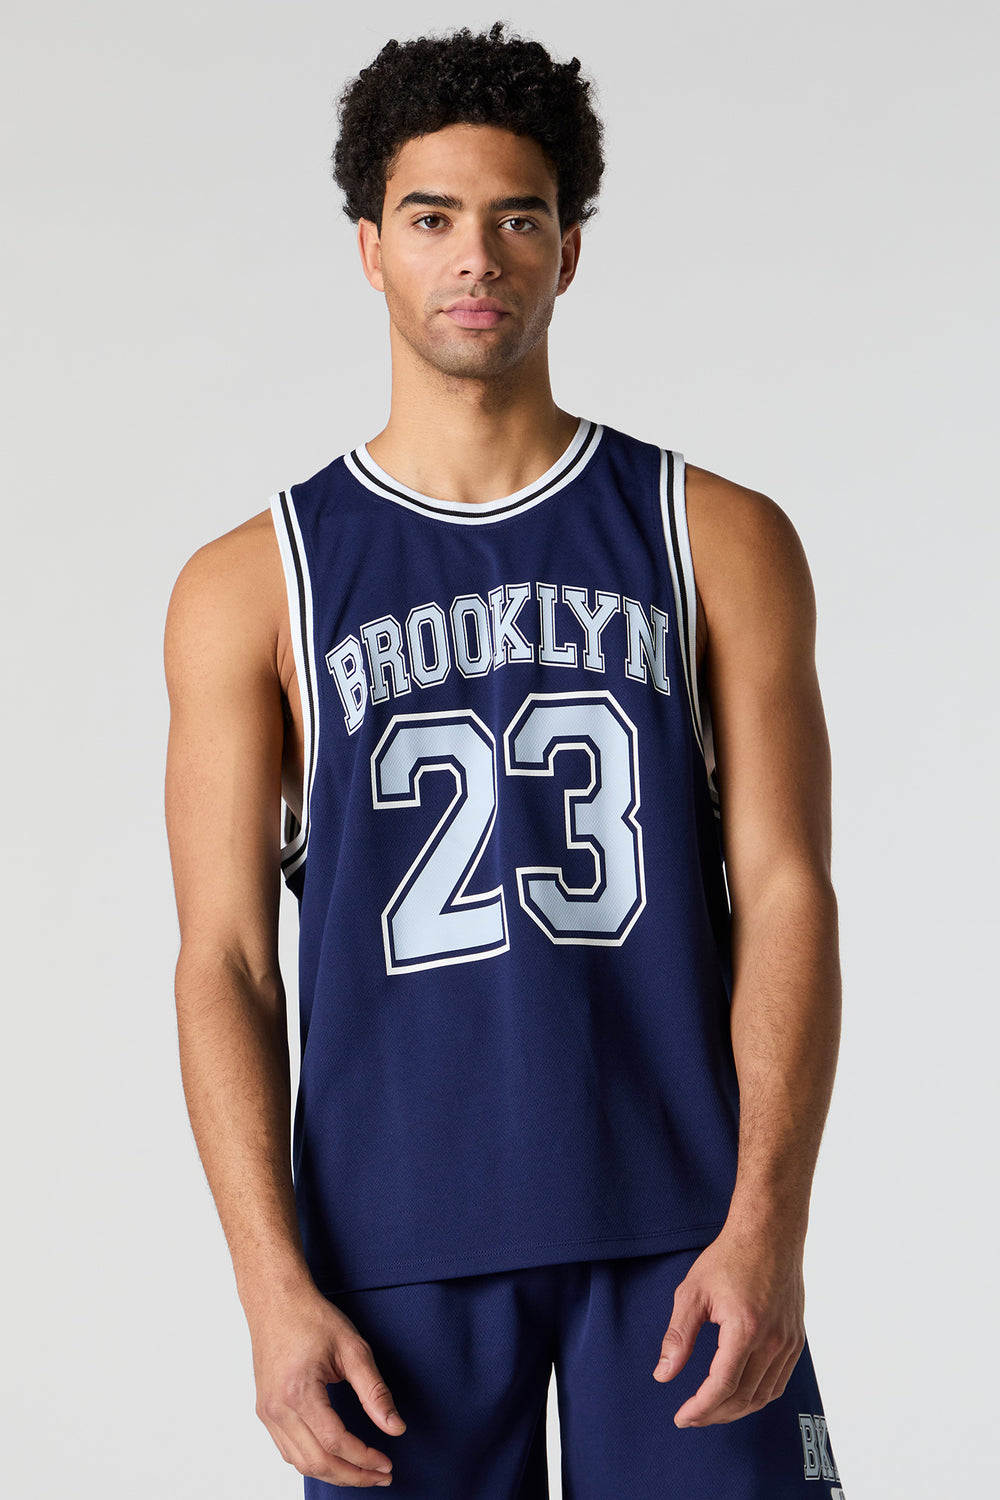 Brooklyn Graphic Mesh Basketball Jersey Brooklyn Graphic Mesh Basketball Jersey 1